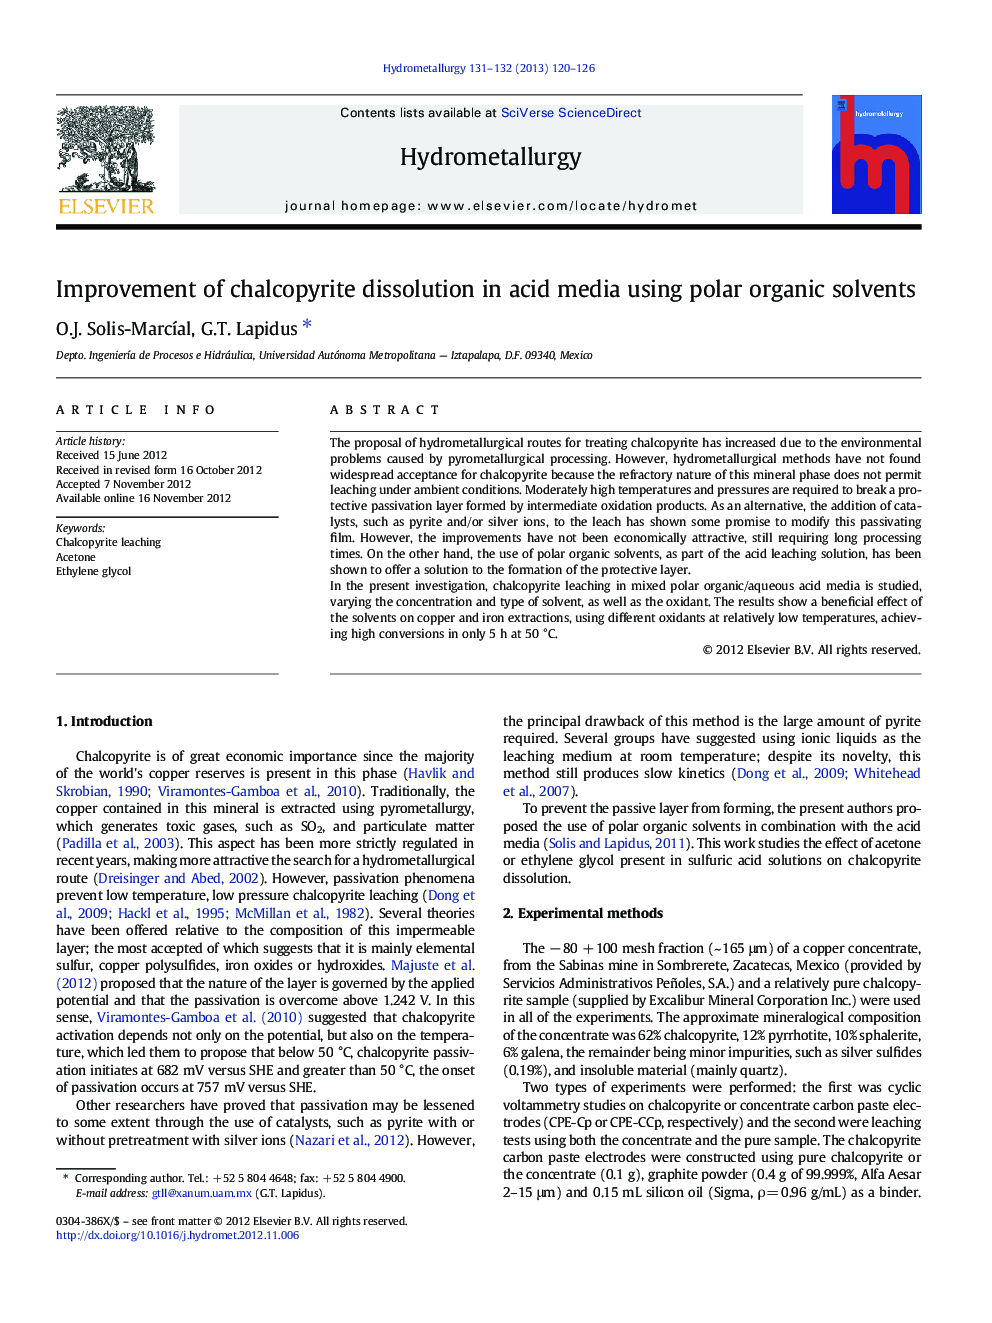 Improvement of chalcopyrite dissolution in acid media using polar organic solvents